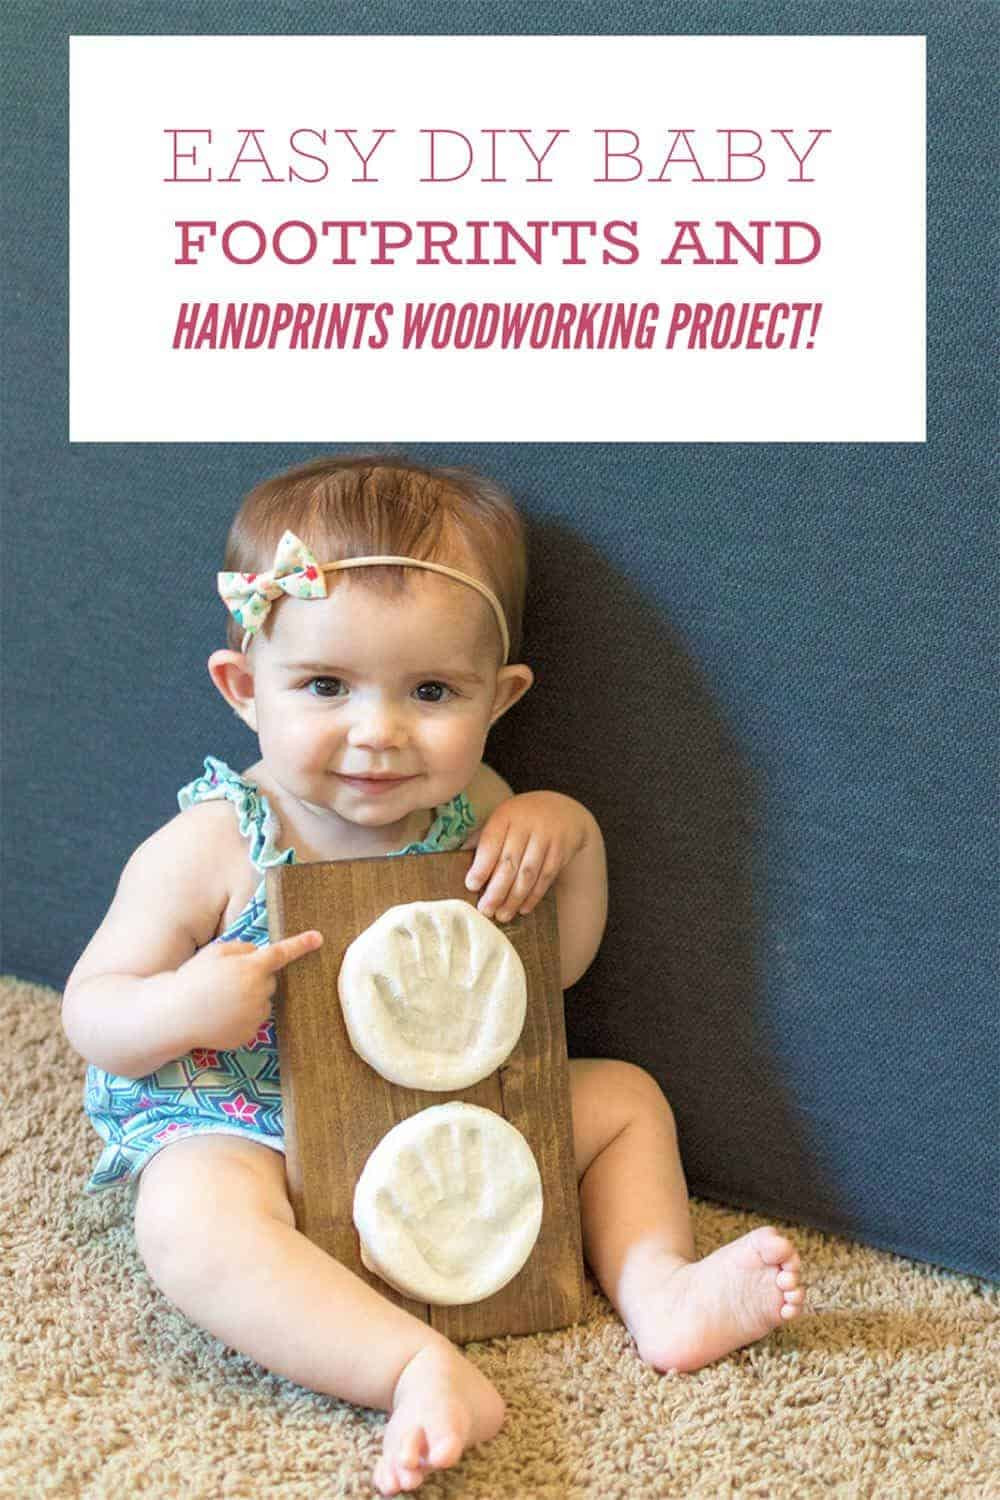 DIY Baby Footprints
 Easy DIY Baby Footprints and Handprints Woodworking Project